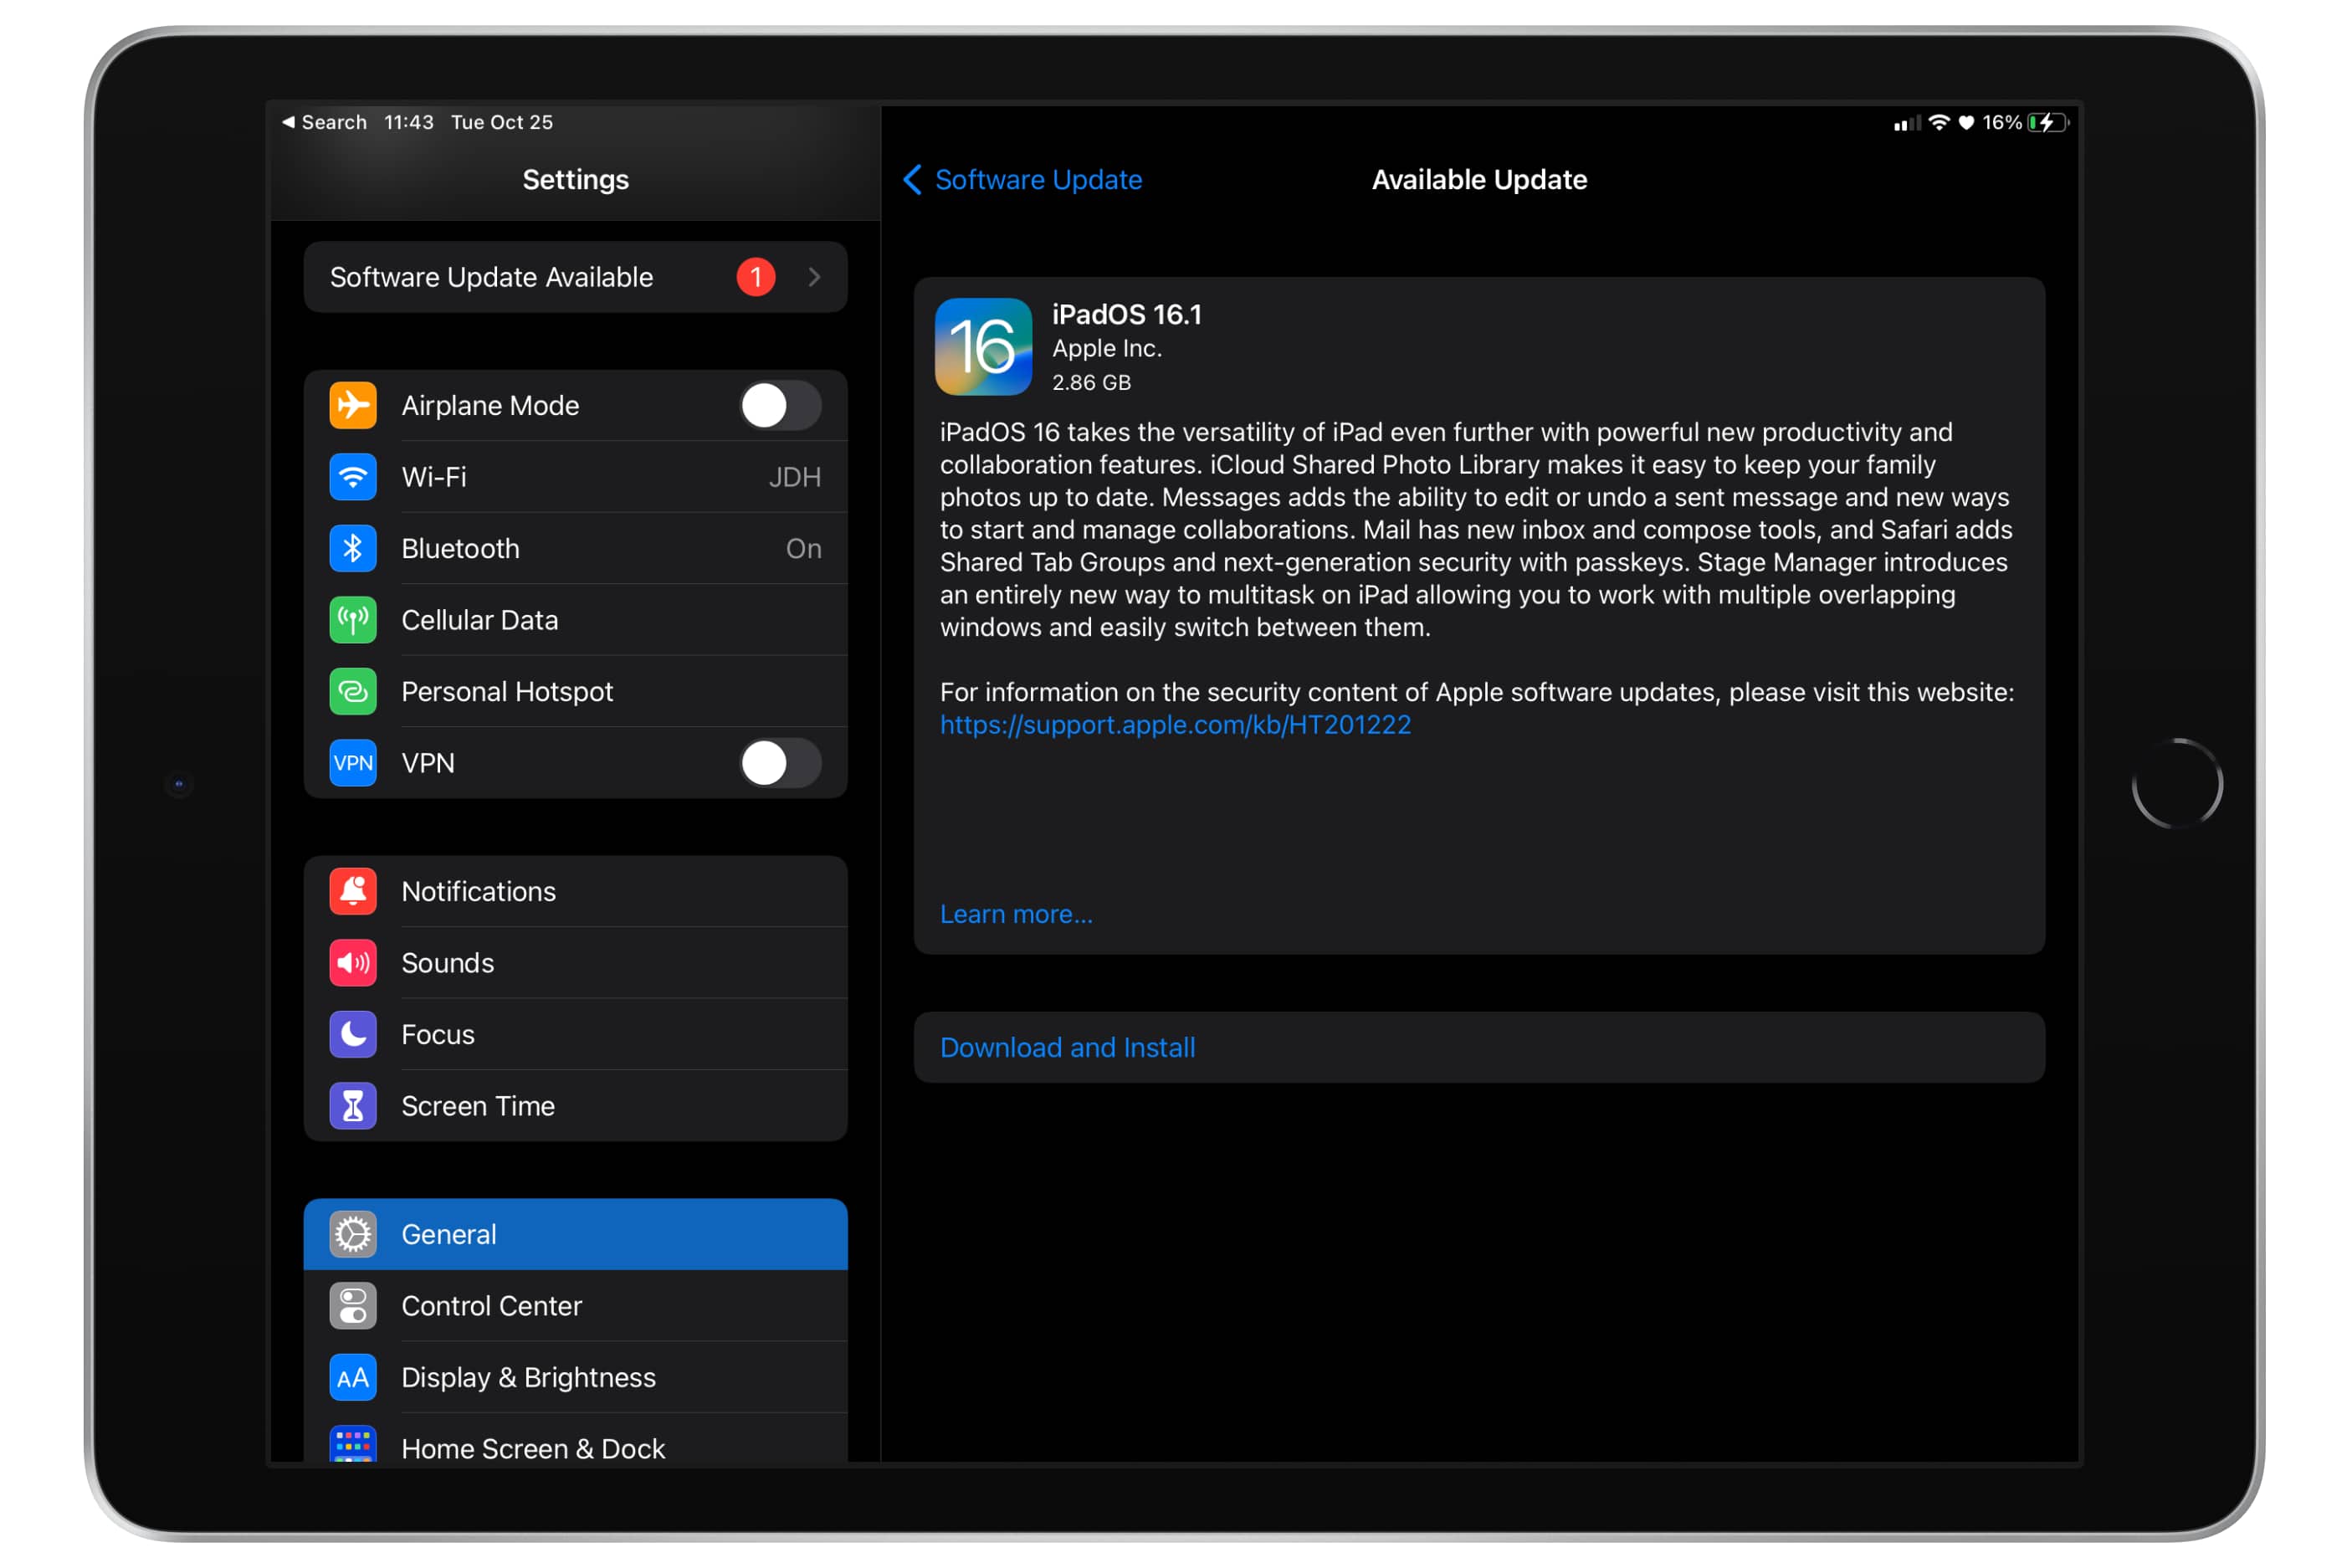 iPadOS 16.1 Software Update Screen on iPad.